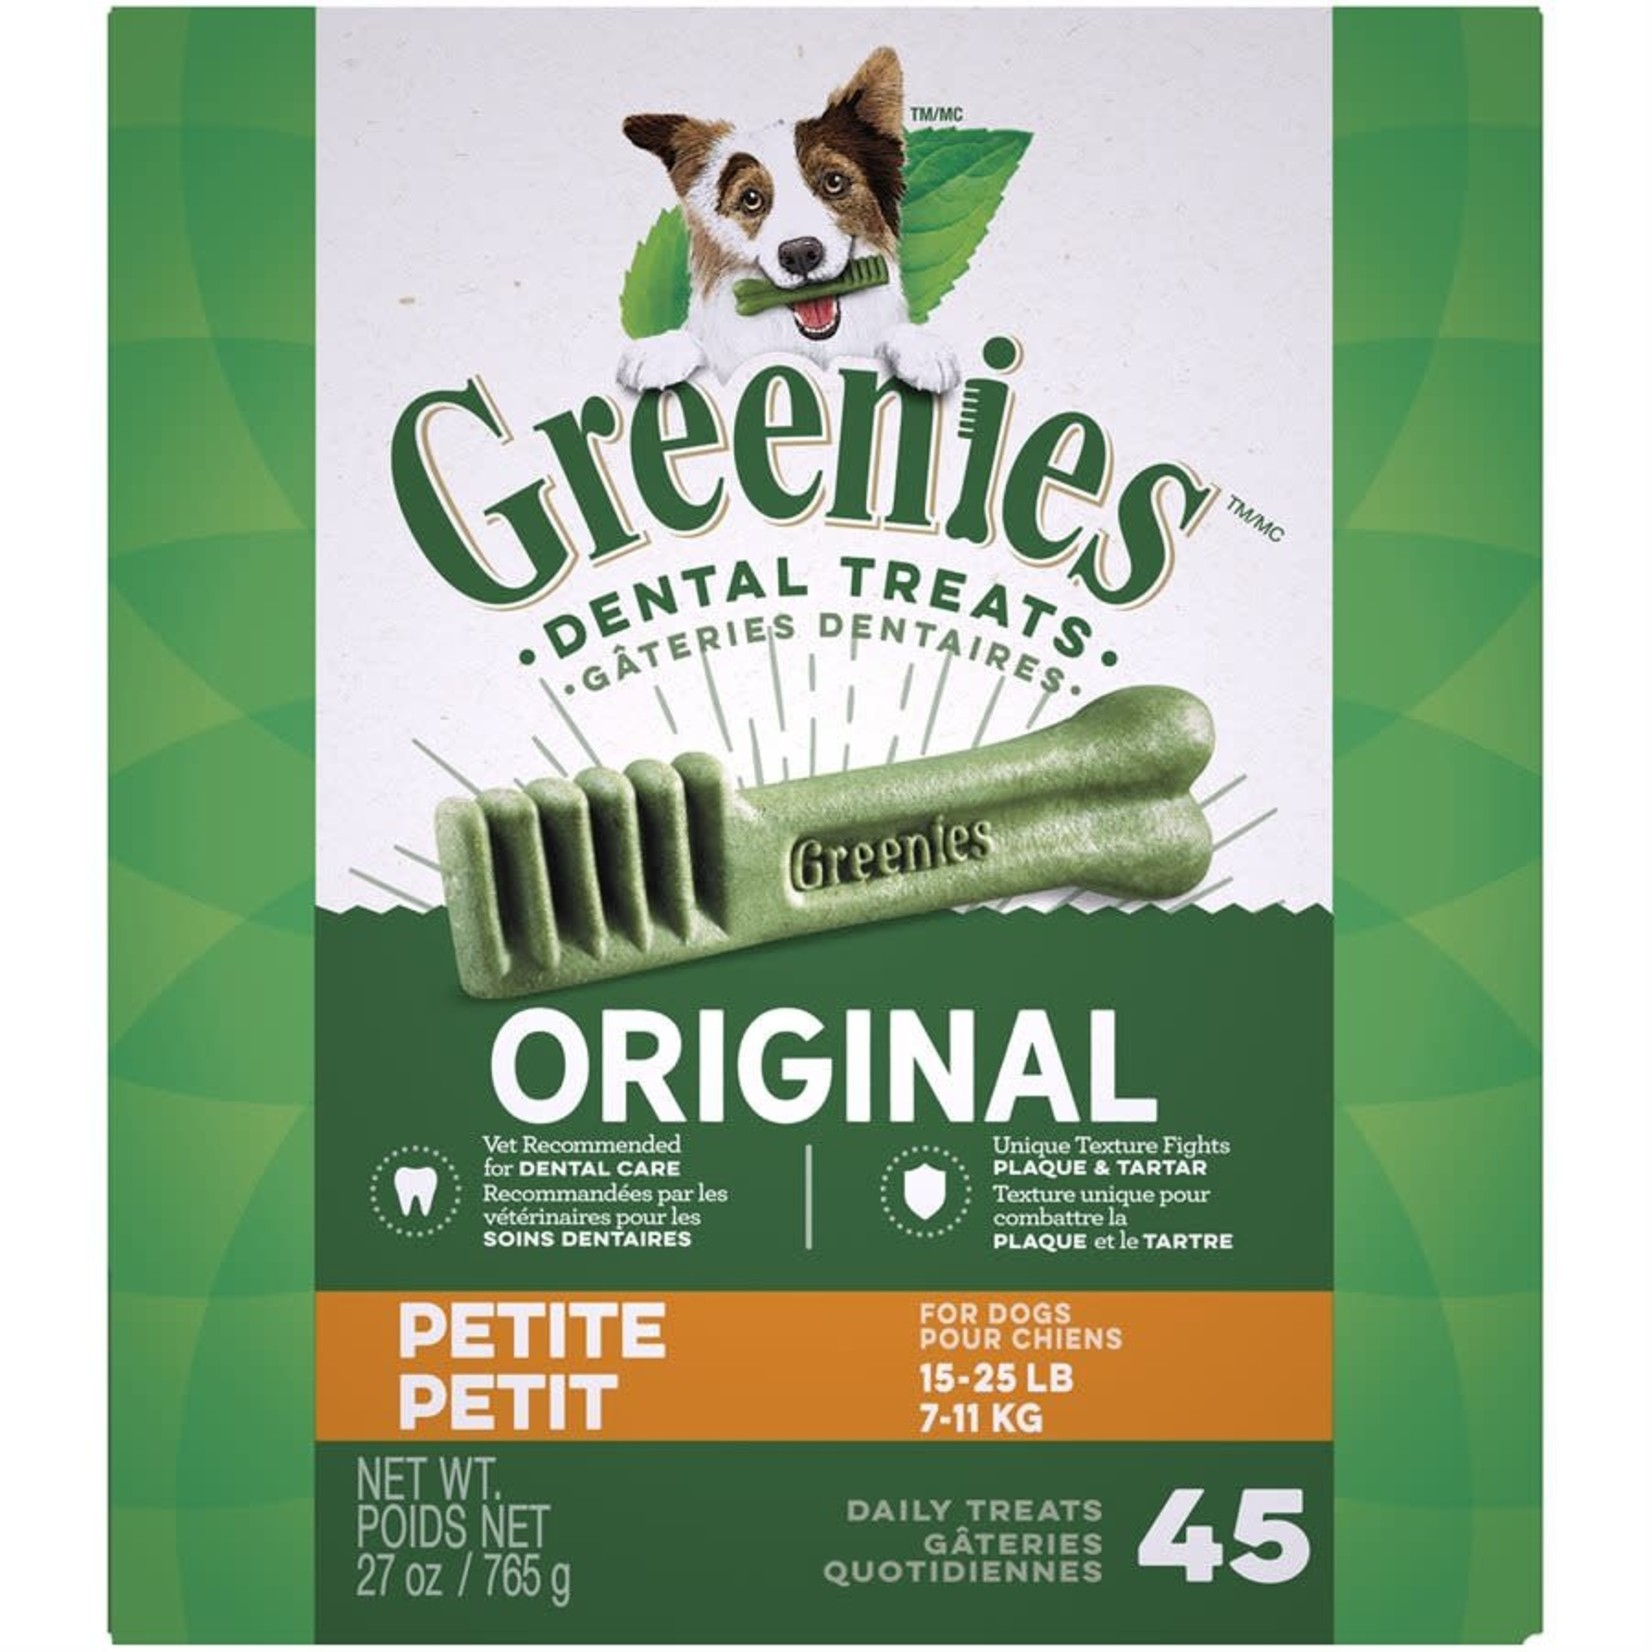 GREENIES Greenies Canine Original ™- Petite 27 oz. ( Box )